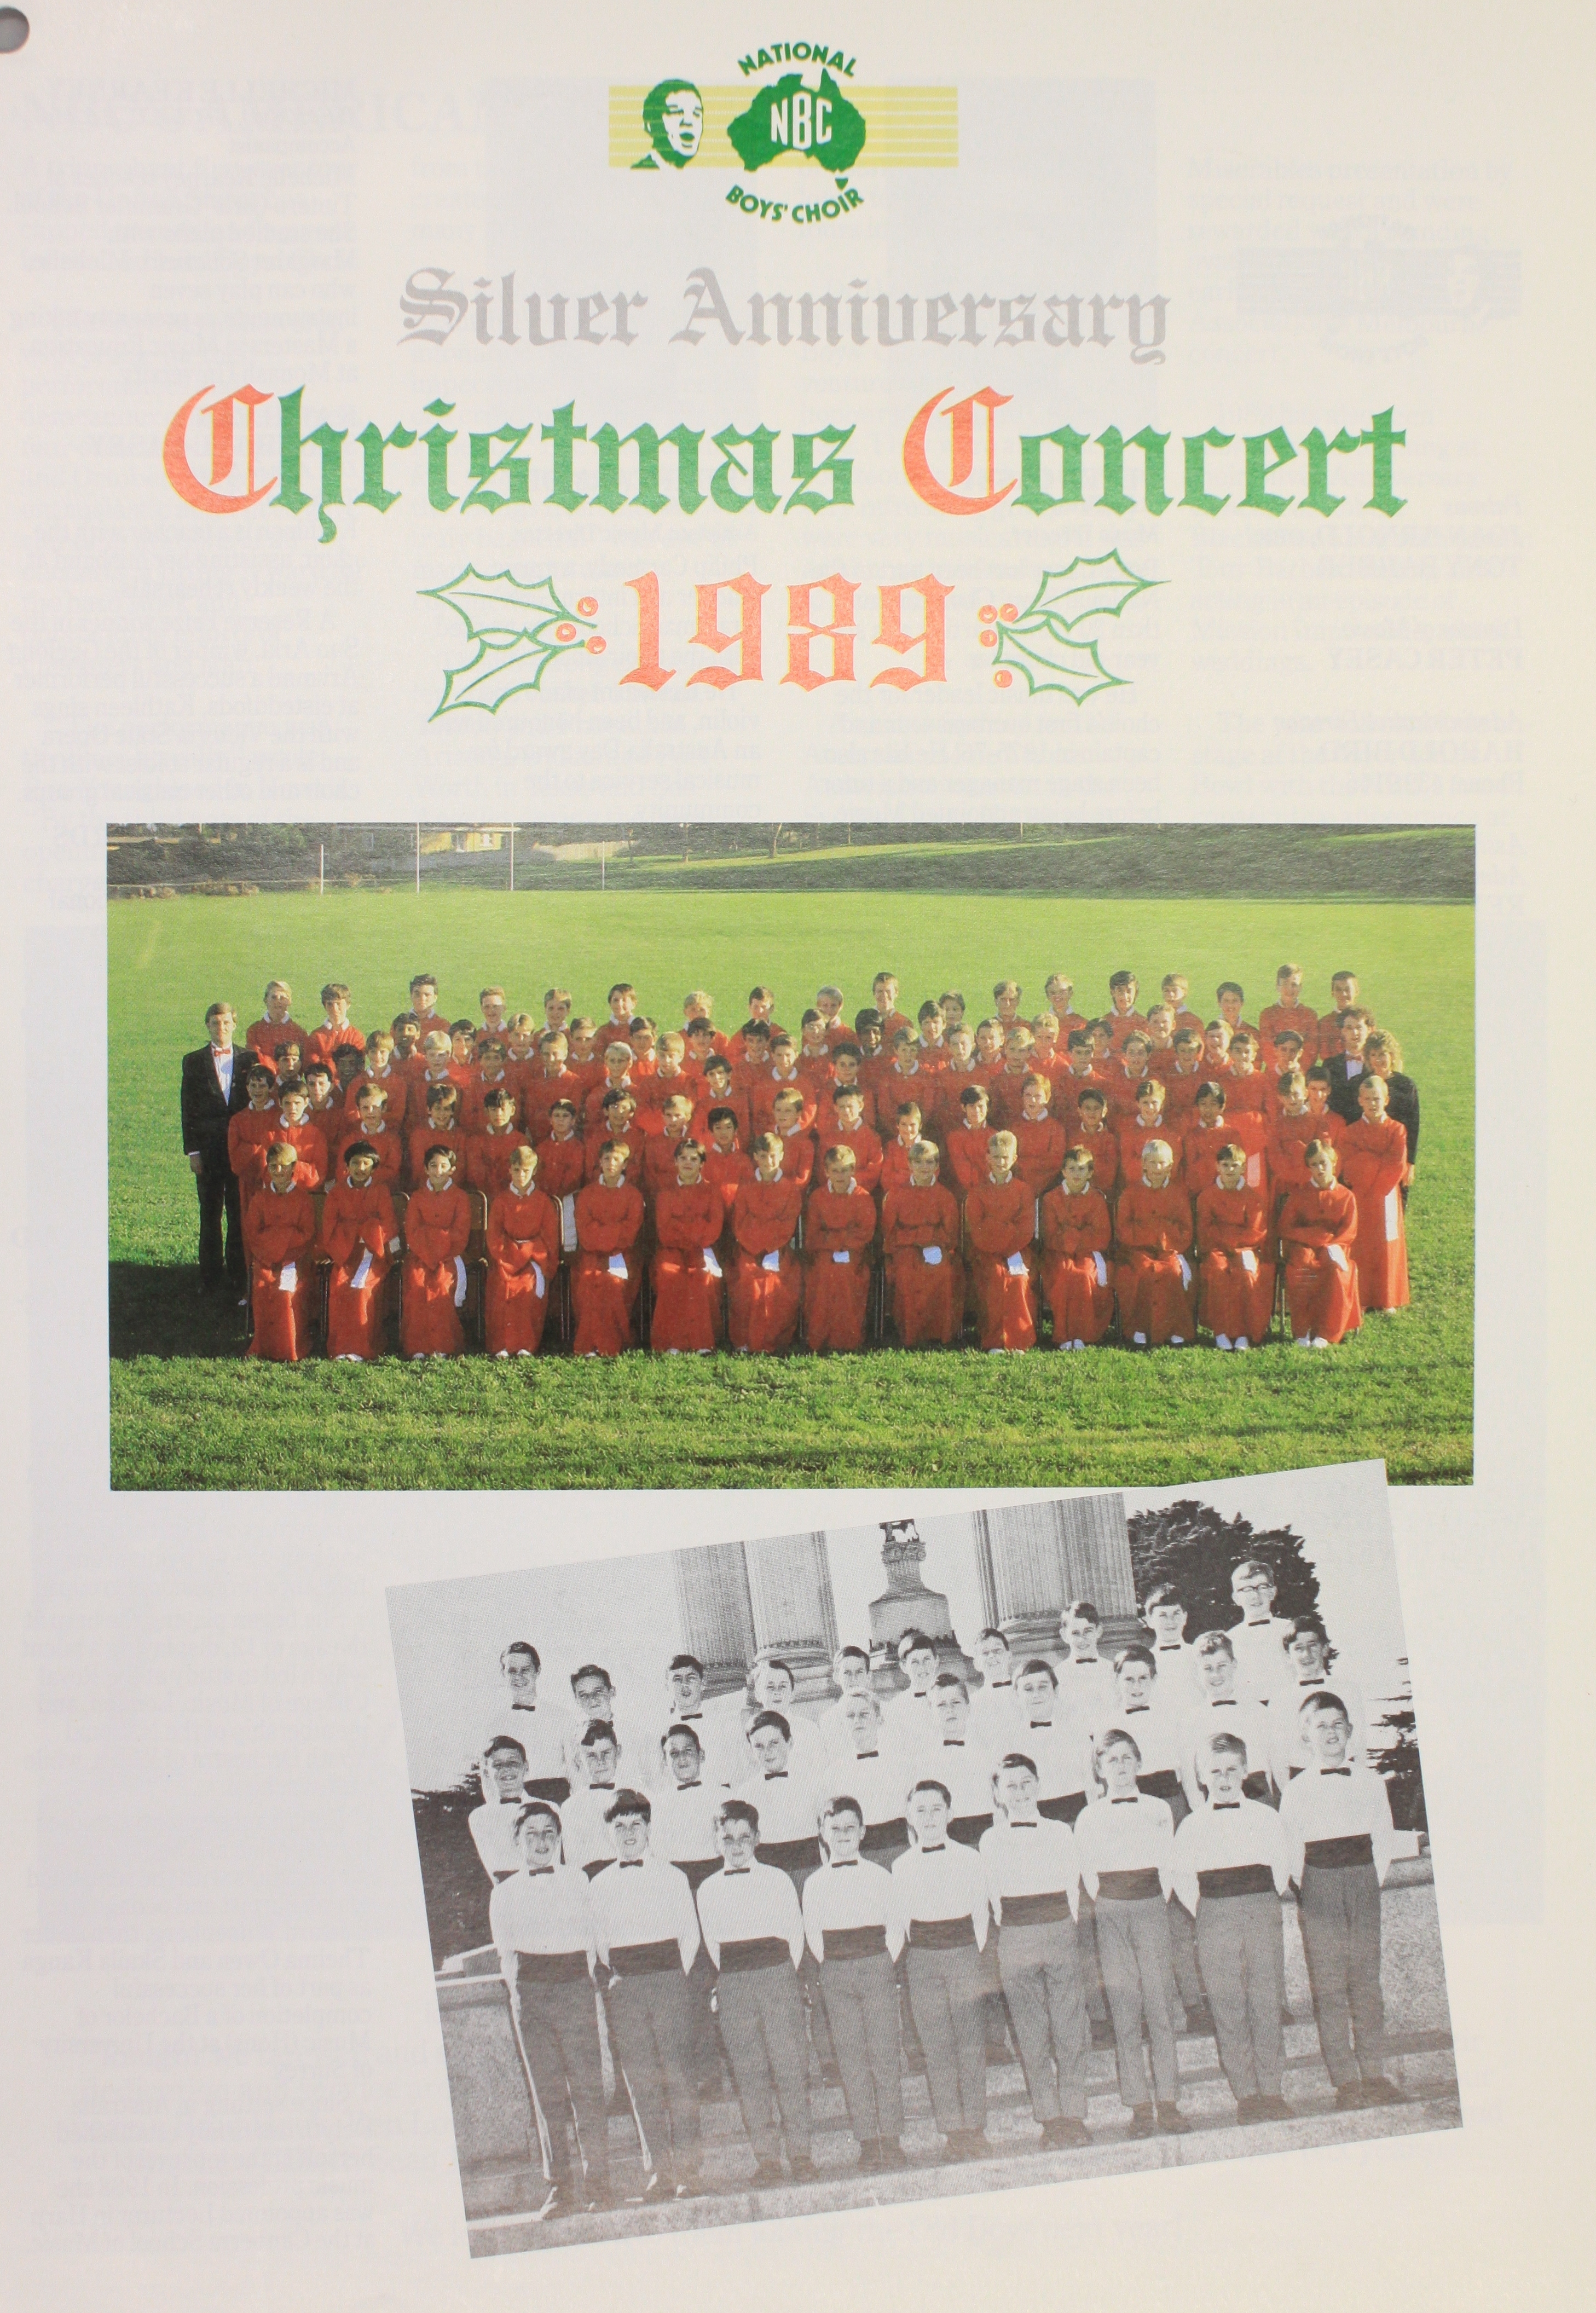 Photo of the choir program